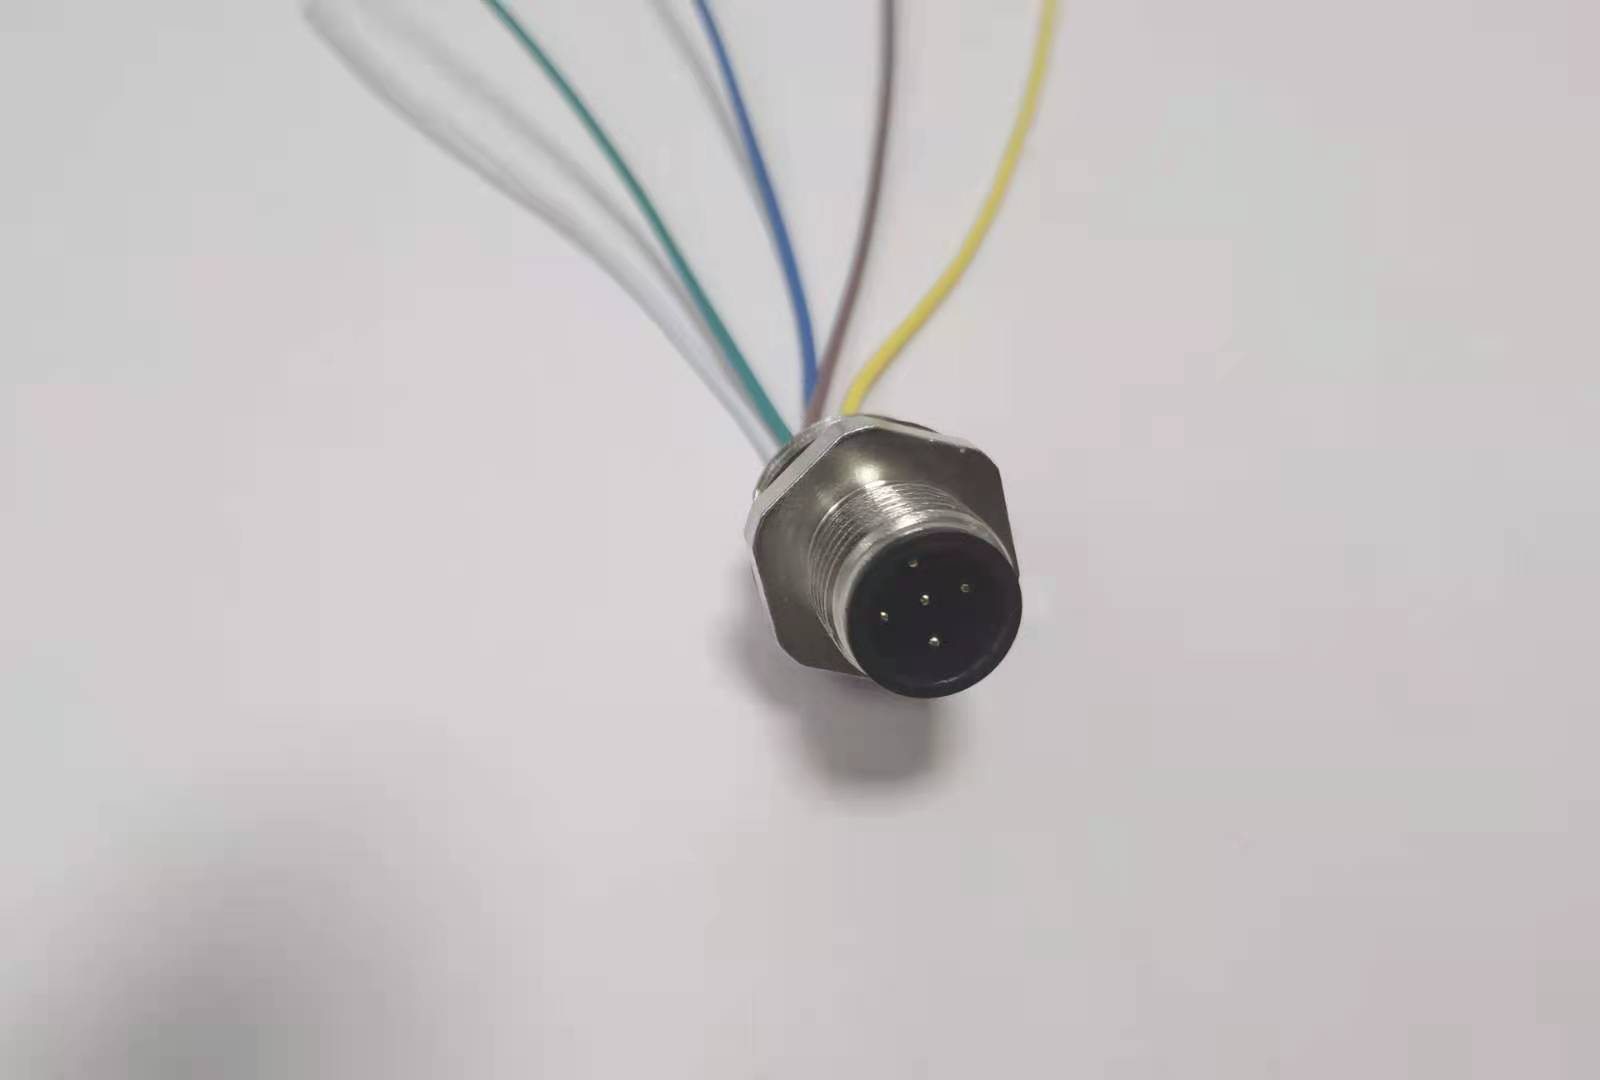 Industrial M12 waterproof circular connector 5pin panel male socket connector